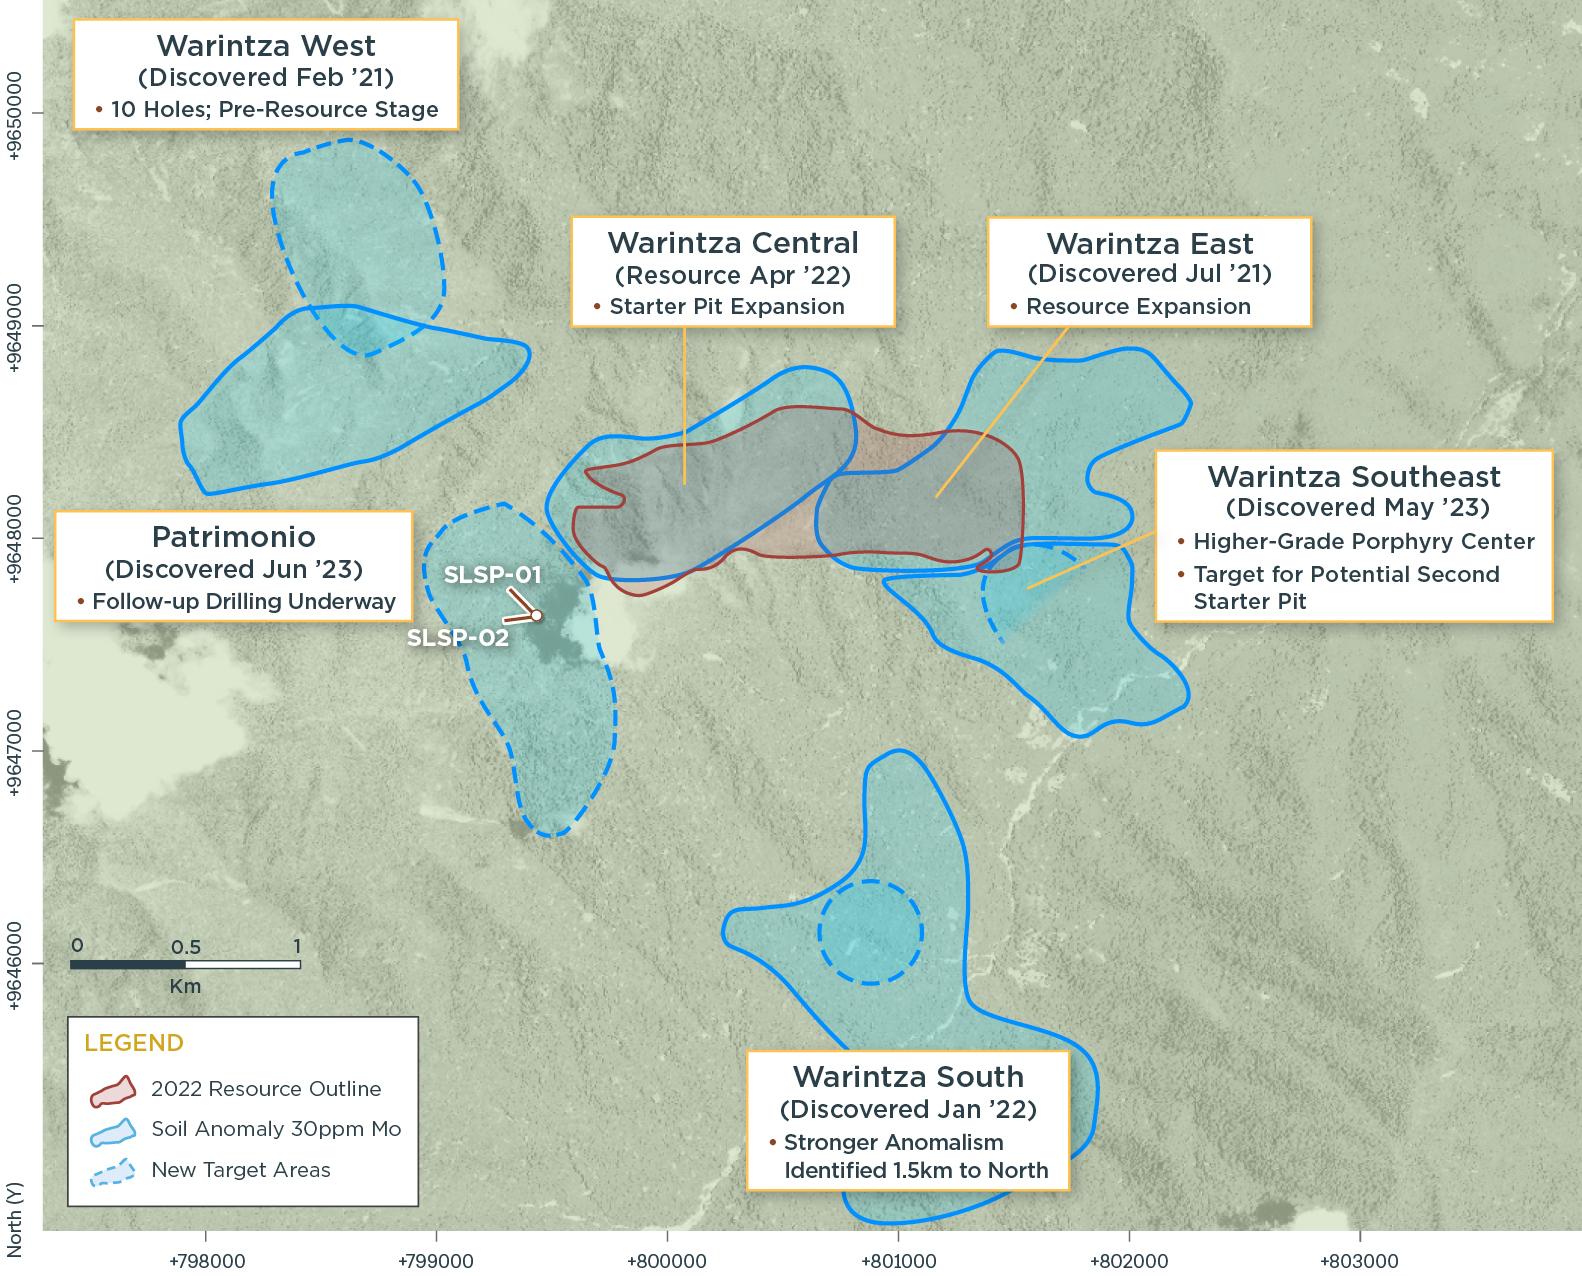 Figure 2 – Plan View of Warintza Porphyry Cluster and Patrimonio Drilling